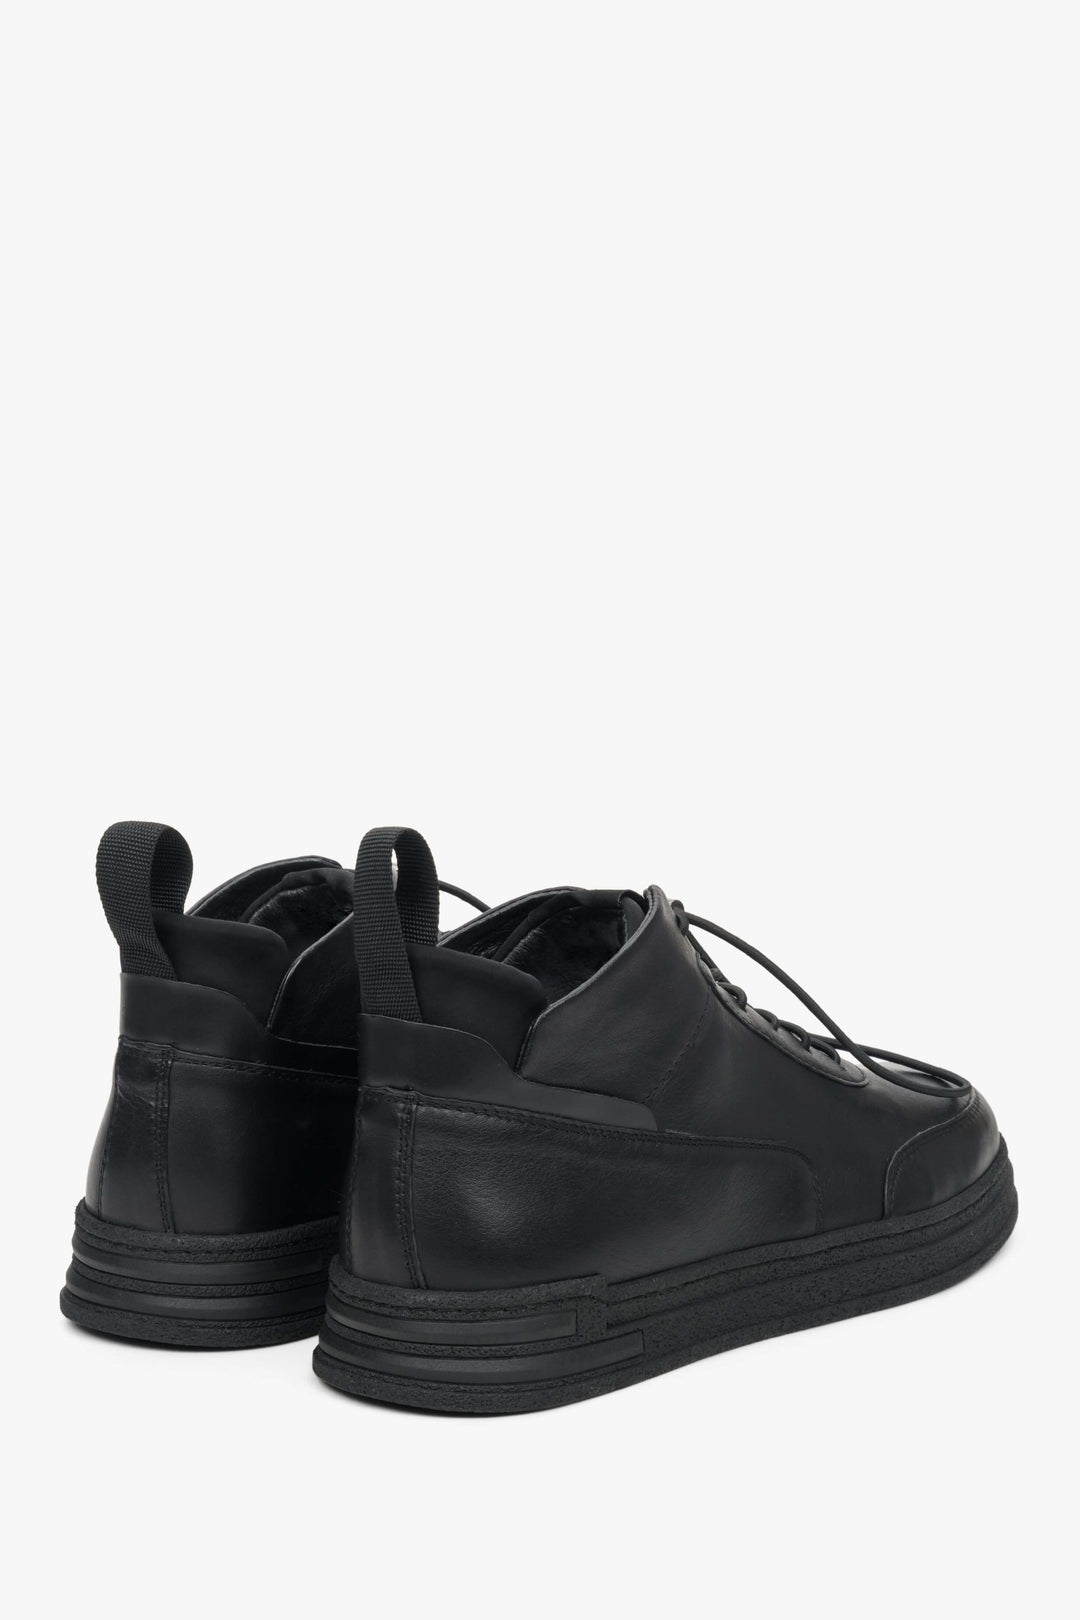 Men's sneakers in black color from genuine leather Estro.